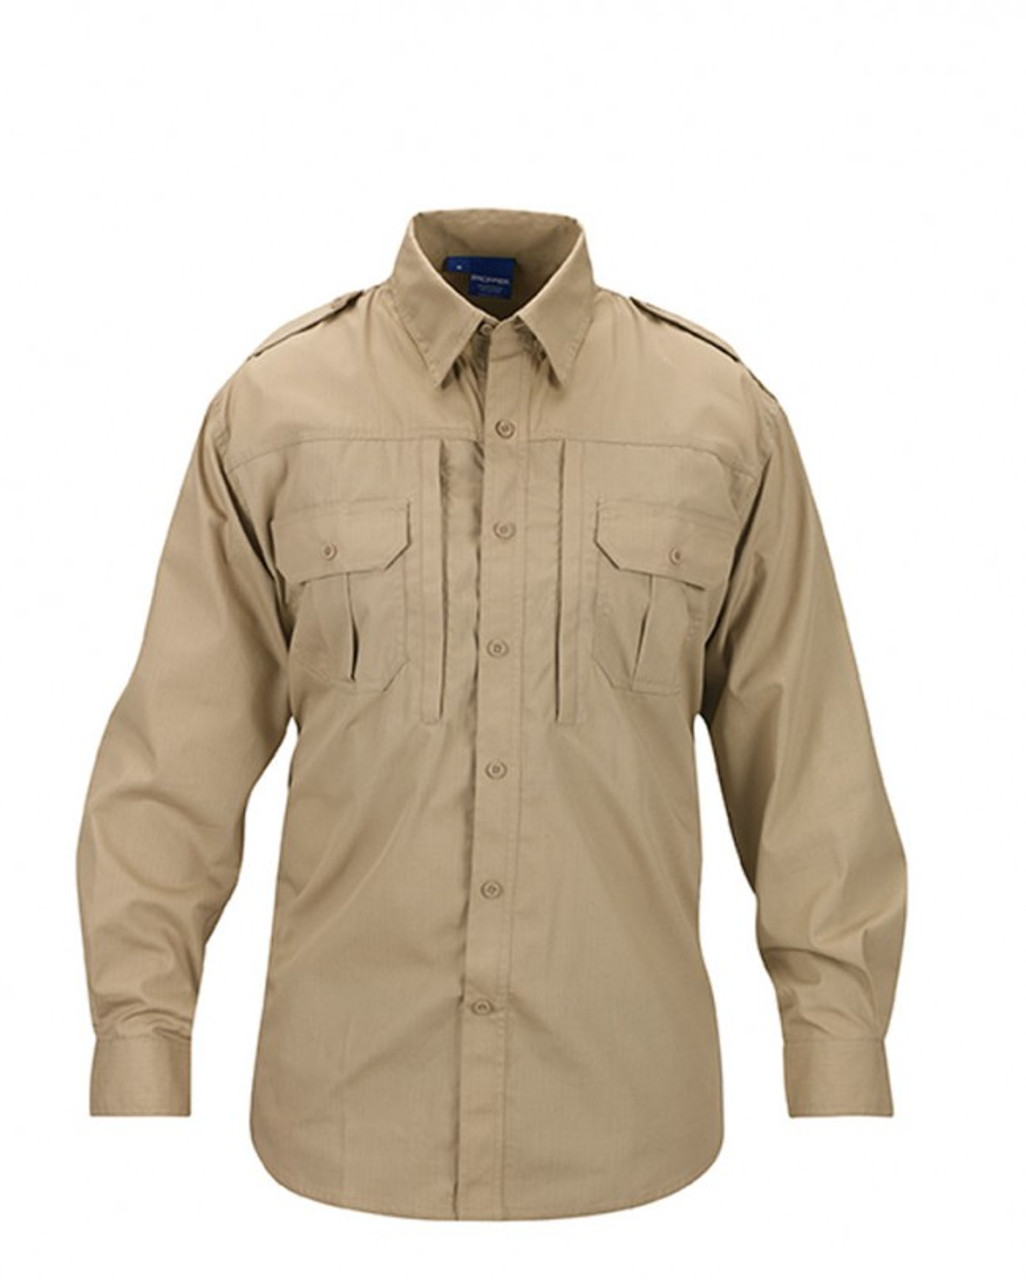 Propper Men's Tactical Shirt Long Sleeve